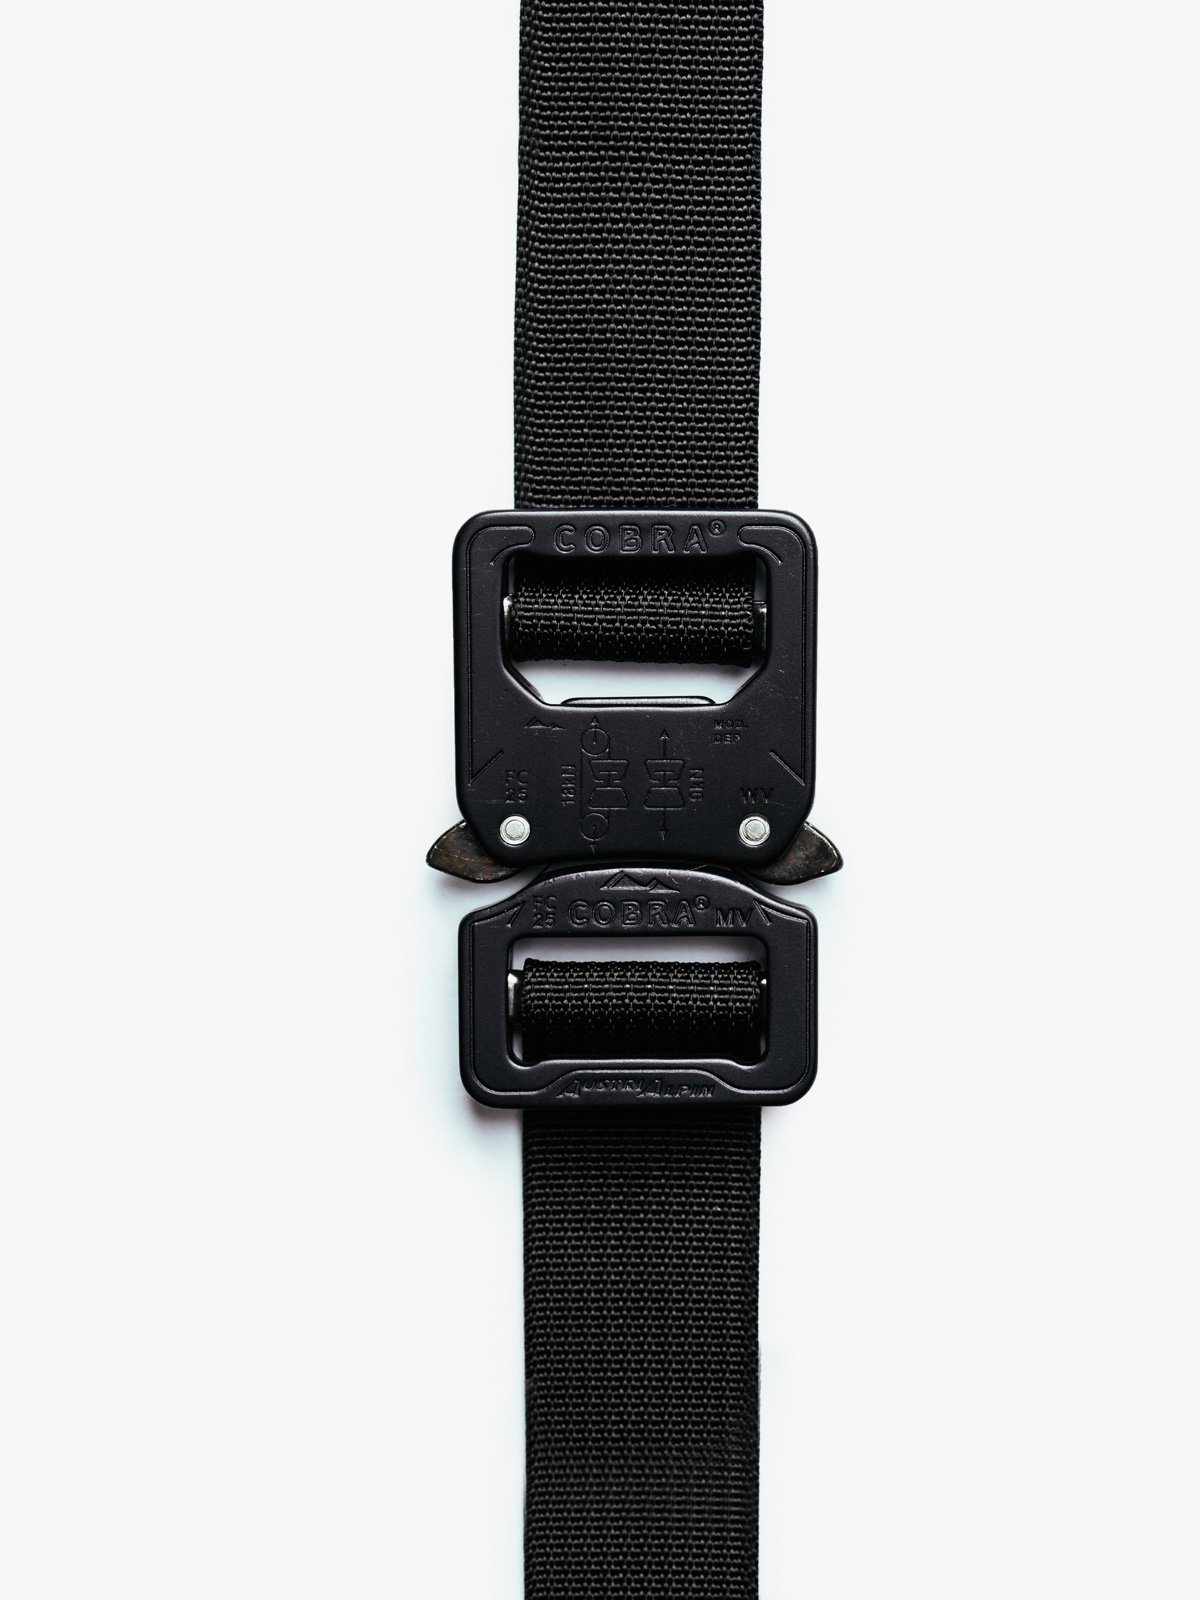 Cobra® Buckle Set : HT500 & Black Camo Rhake by Mission Workshop - Wetterfeste Taschen & Technische Bekleidung - San Francisco & Los Angeles - Built to endure - Guaranteed forever